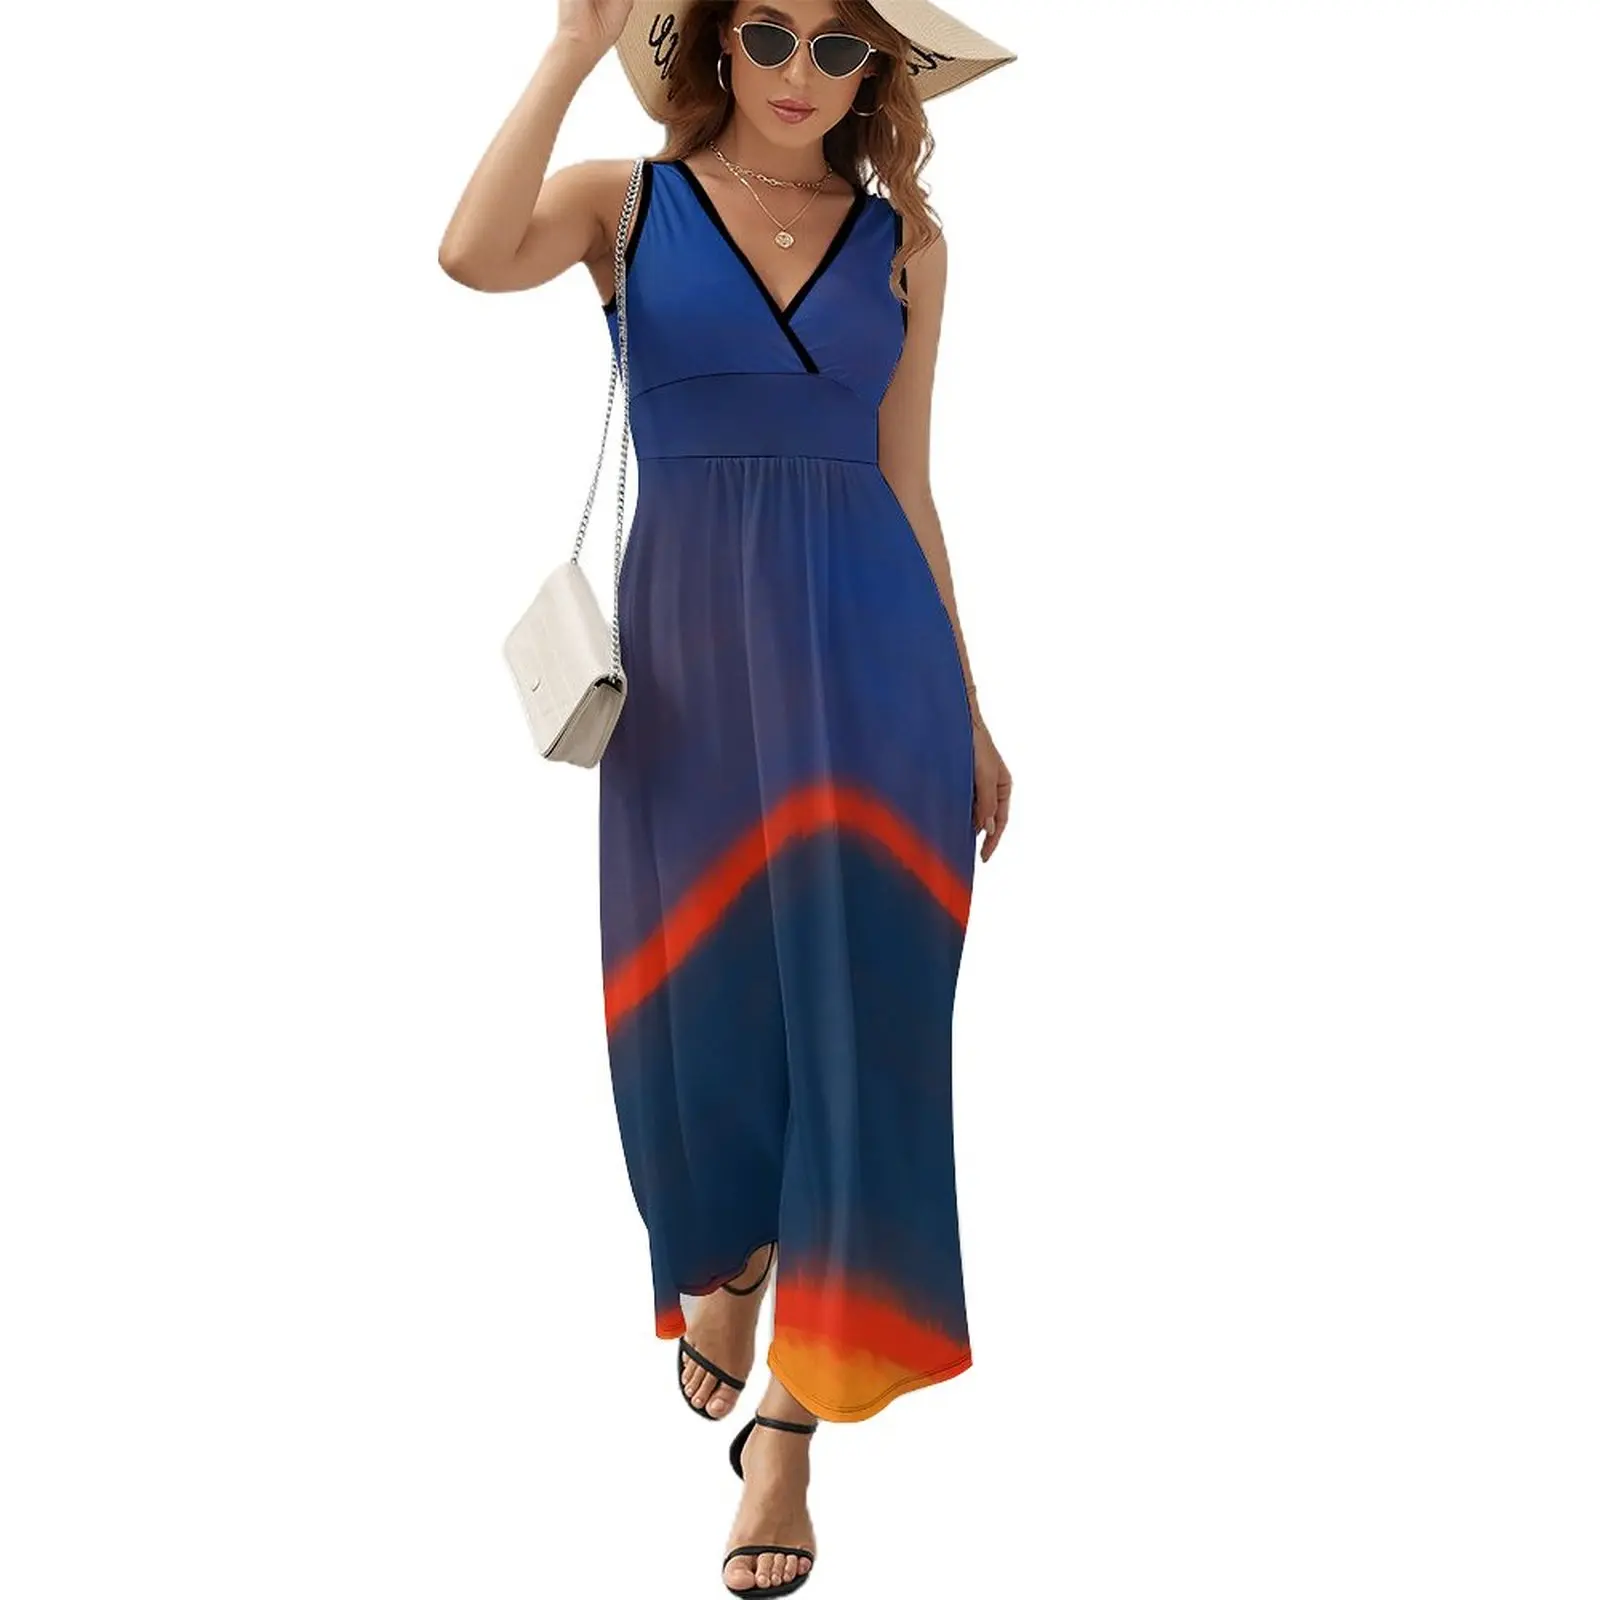 

Rothko Inspired #7 Sleeveless Dress Women's clothing Summer skirt evening dress luxury women's party dress evening prom